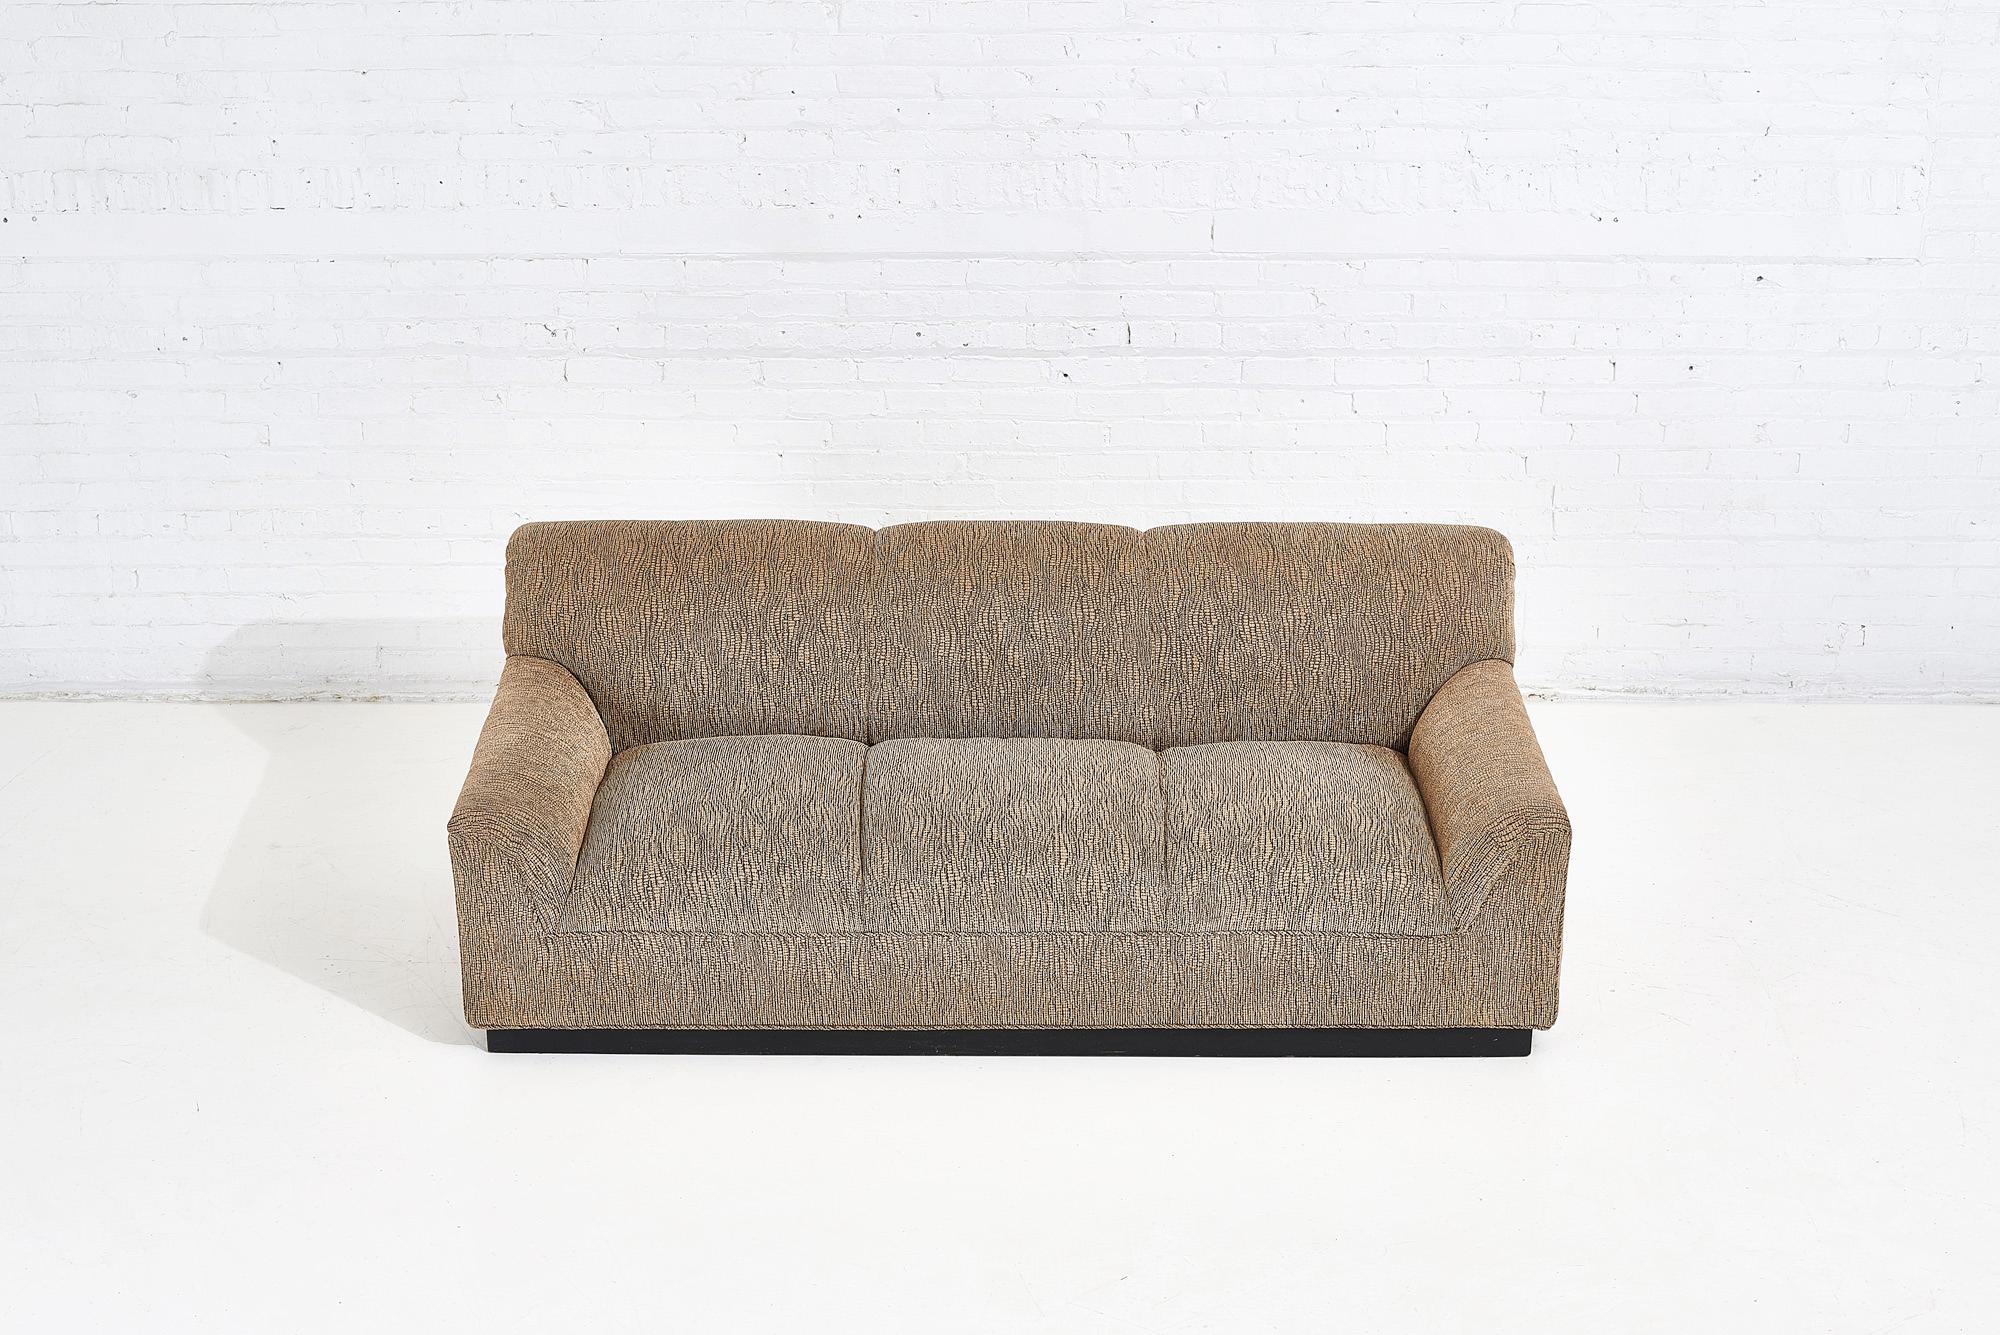 1970 sofa upholstered in Jack Lenor Larson fabric. Original with black plinth base.